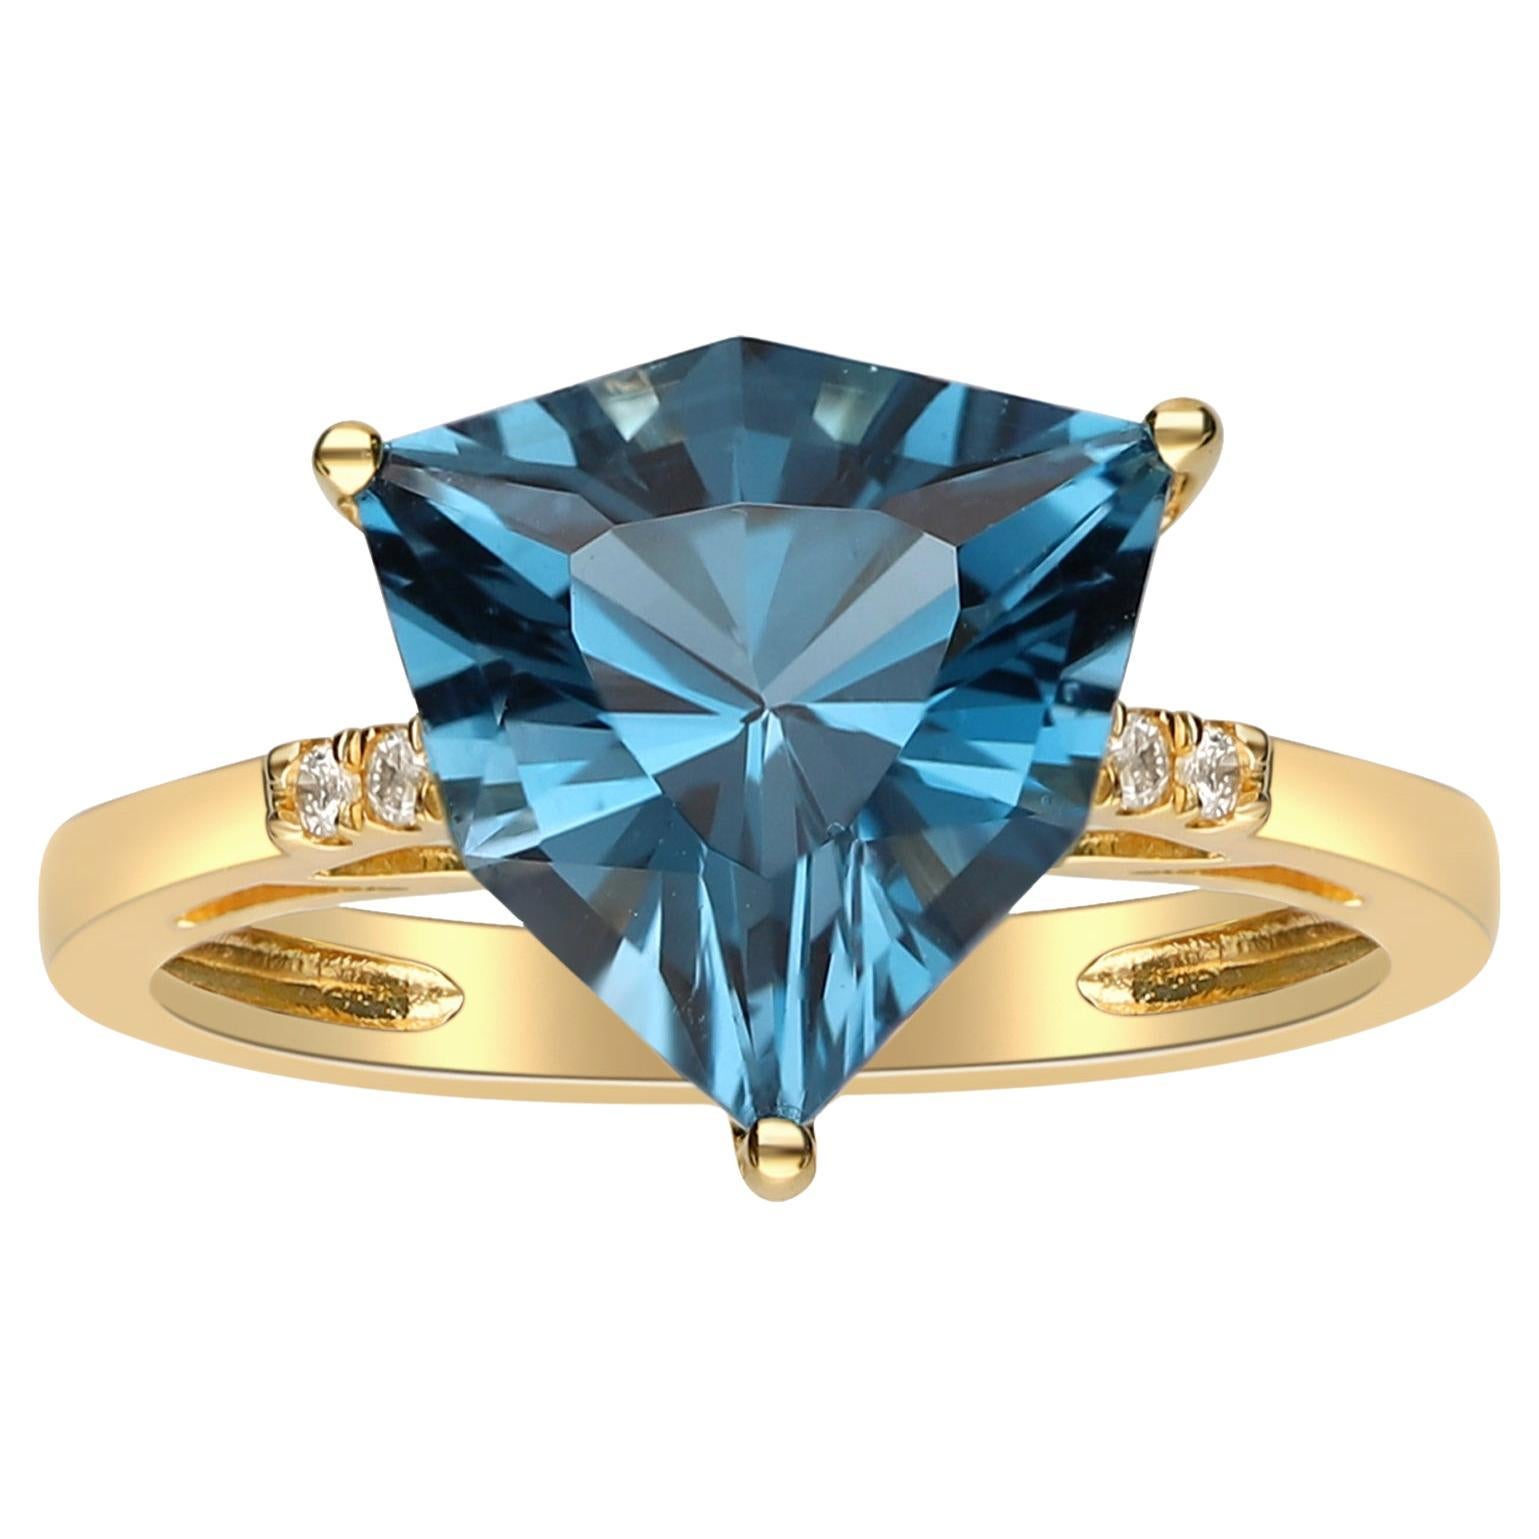 4.26 Carat Trillion-Cut London Blue Topaz Diamond Accents 14K Yellow Gold Ring